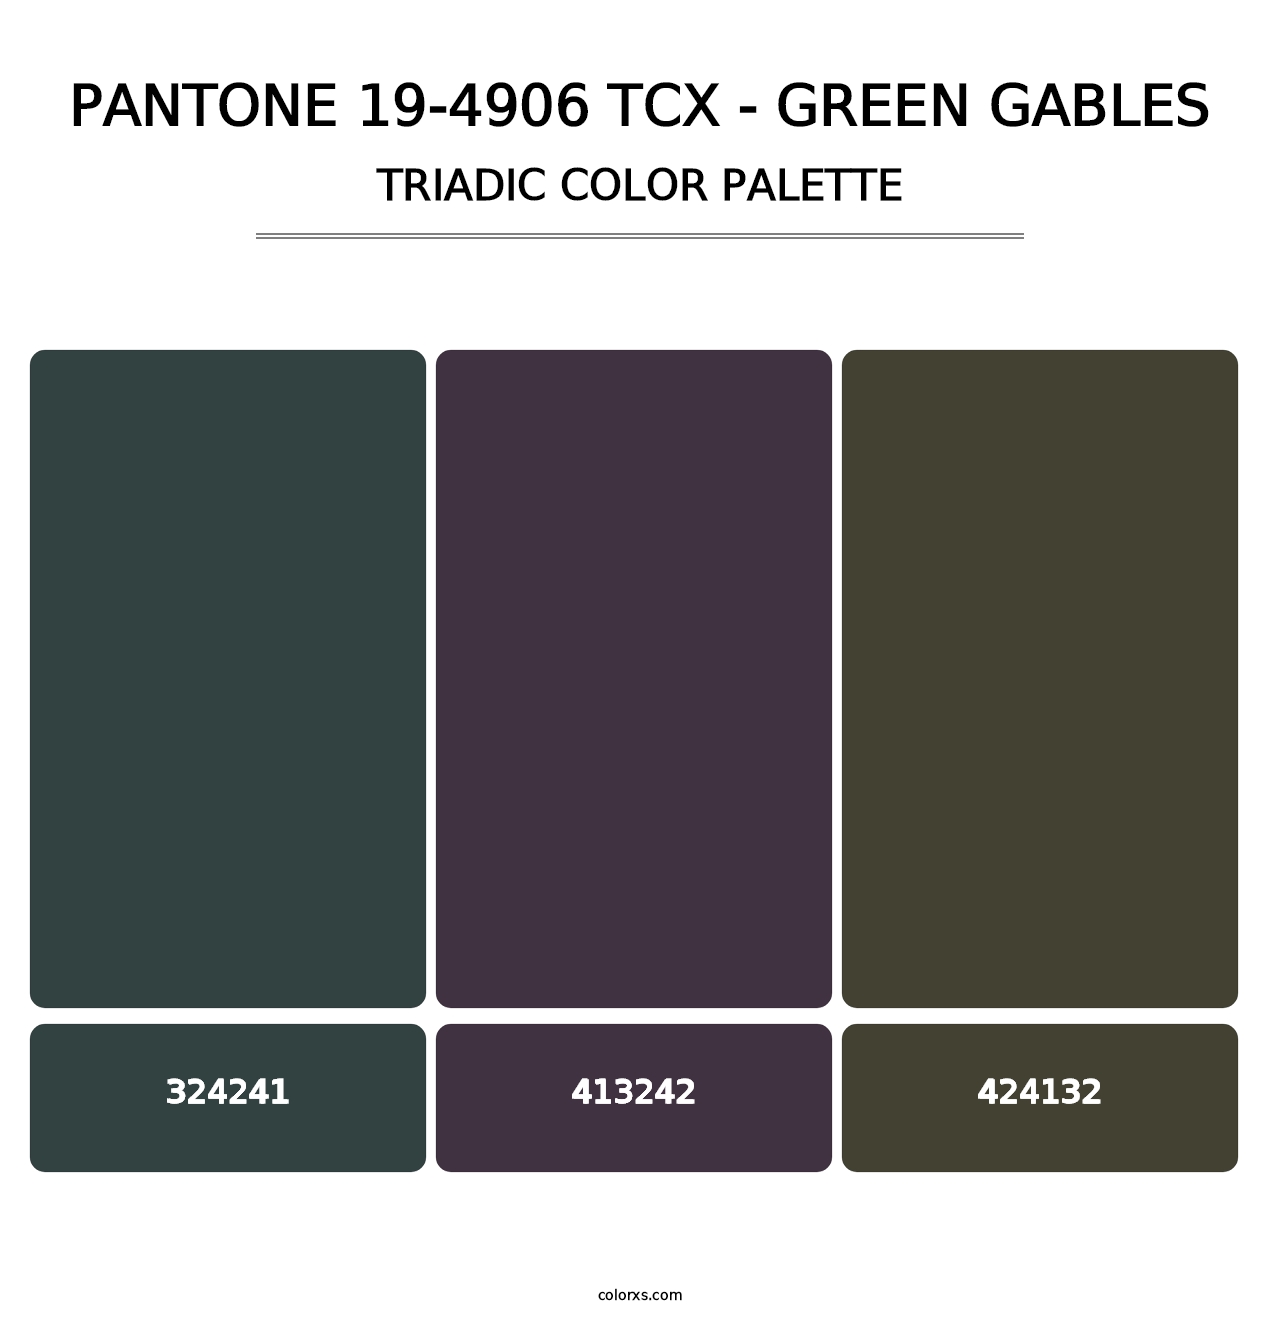 PANTONE 19-4906 TCX - Green Gables - Triadic Color Palette